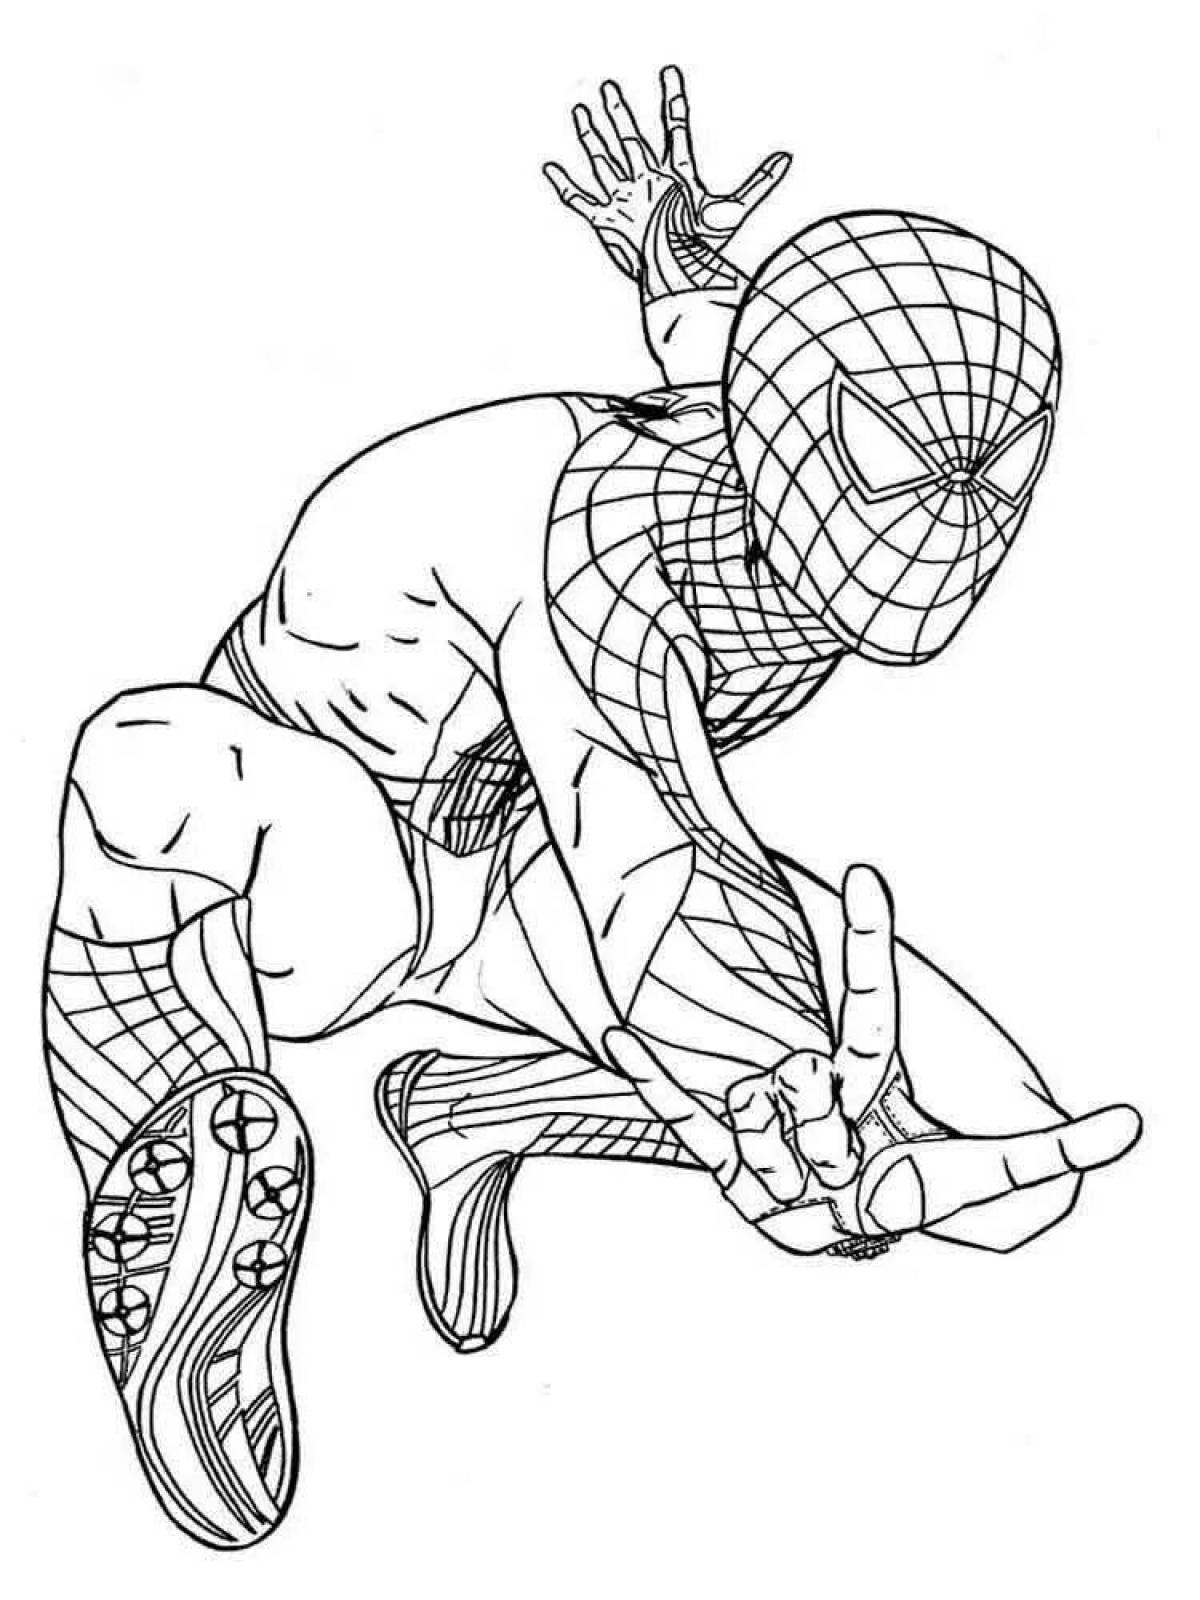 Amazing Spiderman coloring book